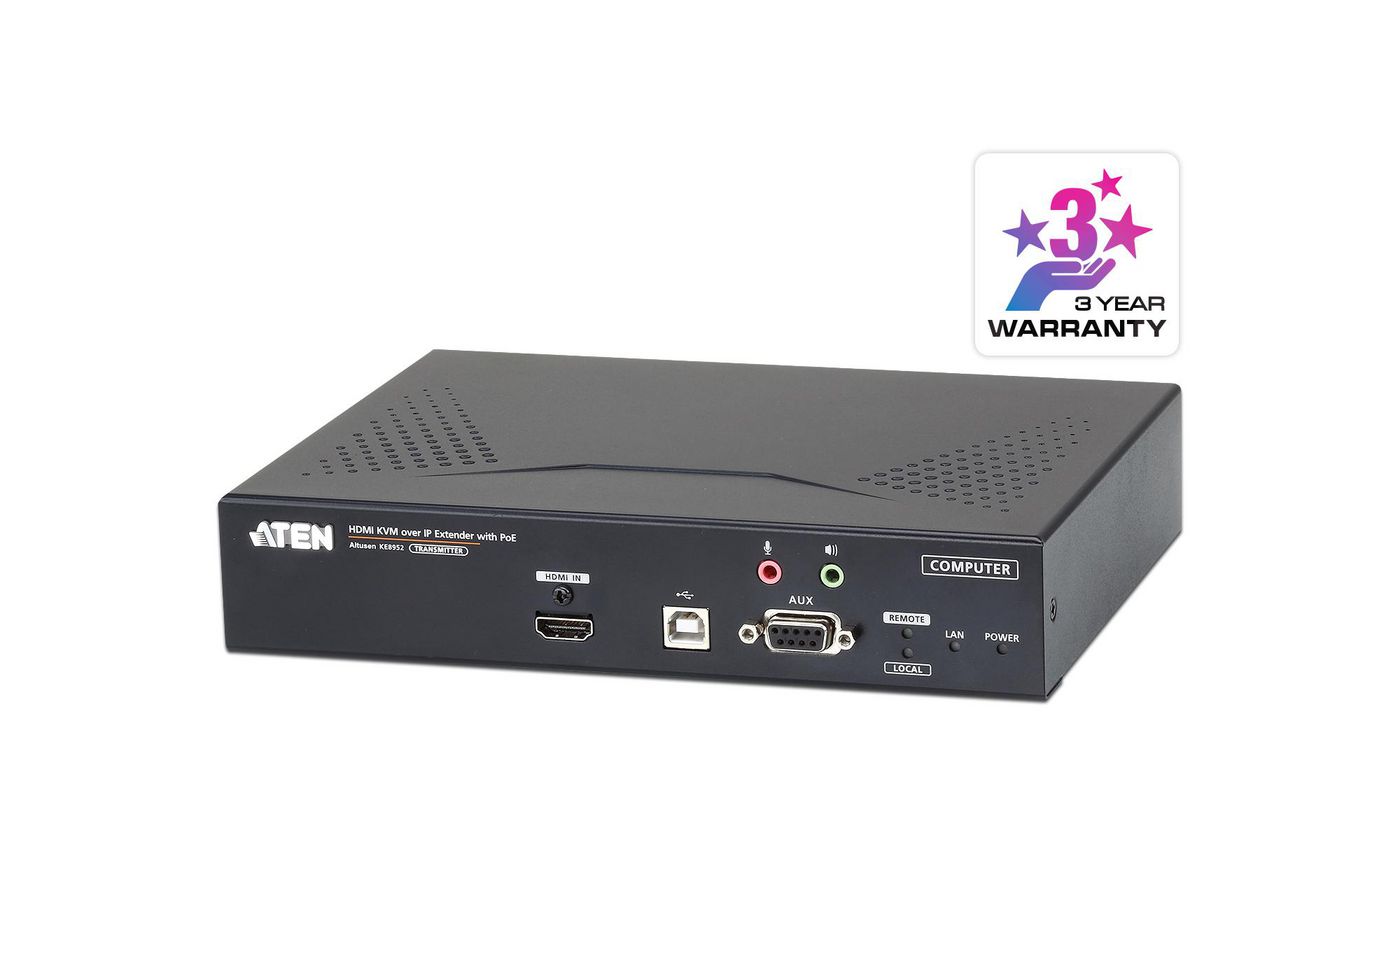 USB 4k Hdmi KVM Over Ip Transmitter With Local Console  Power/lan Redundancy (sfp Slot - Poe)